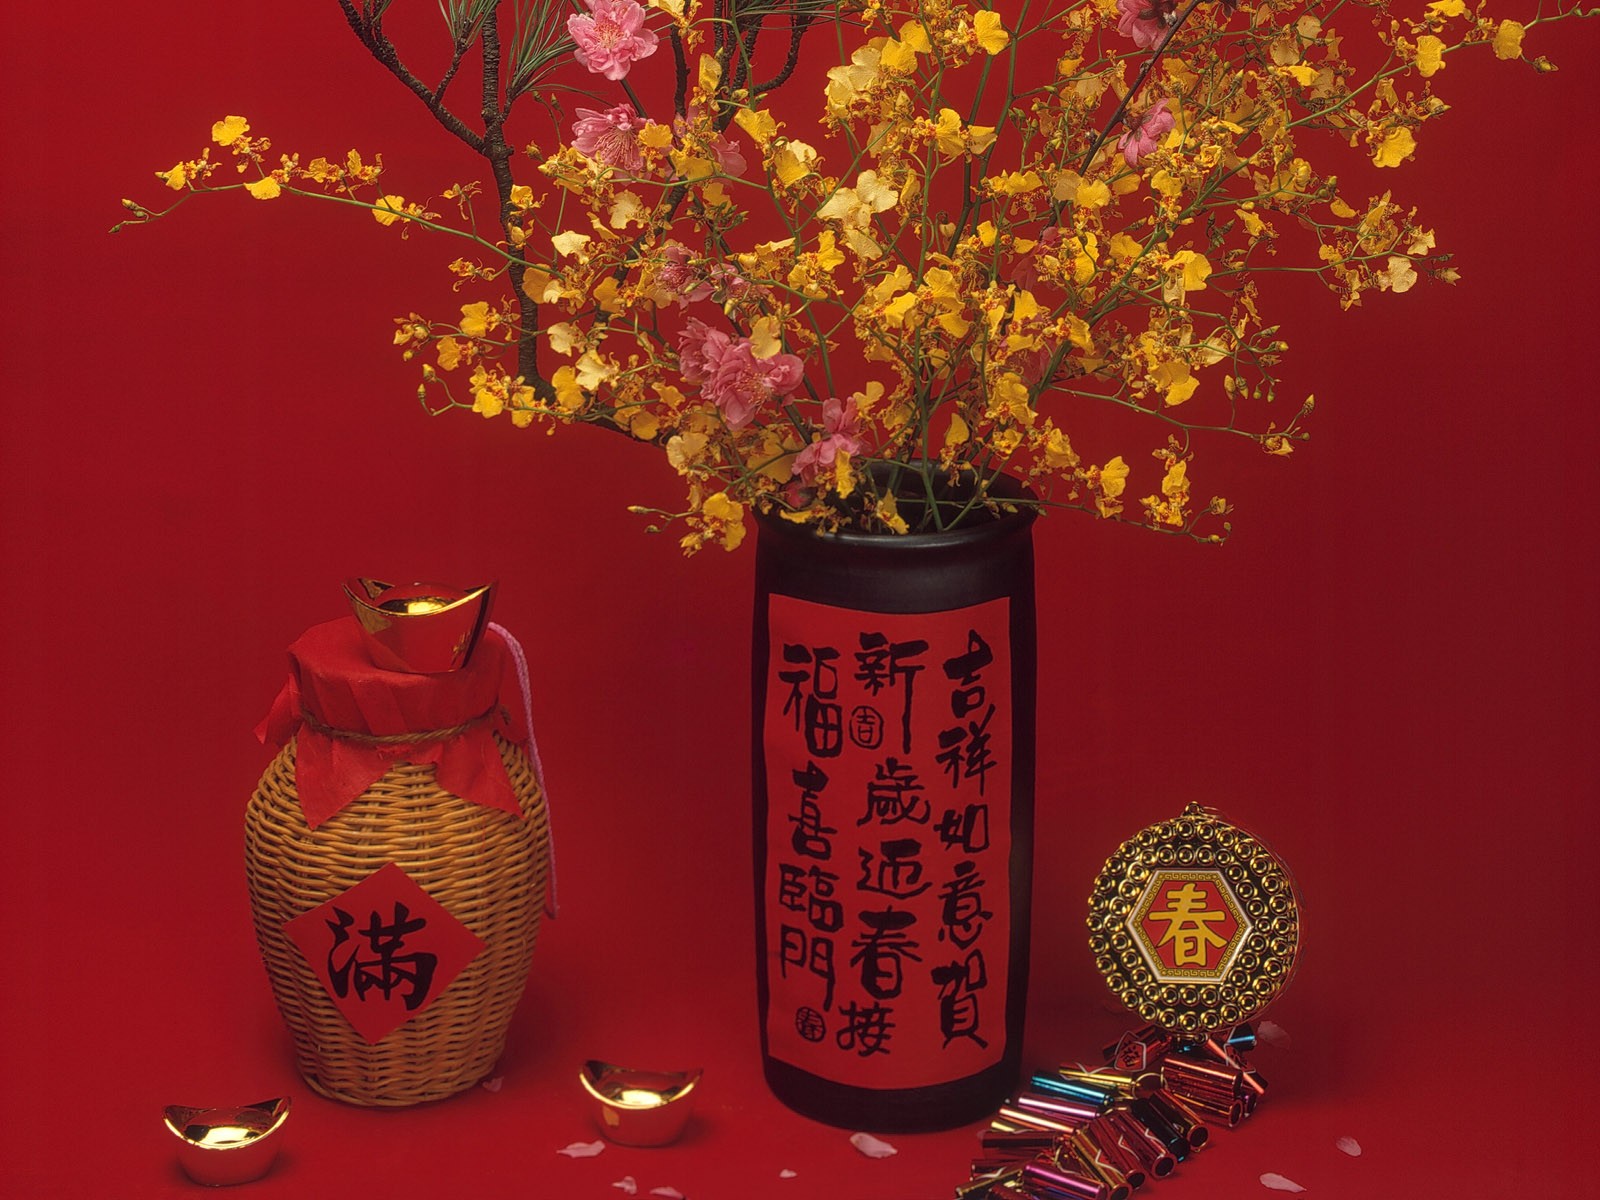 China Wind festive red wallpaper #11 - 1600x1200